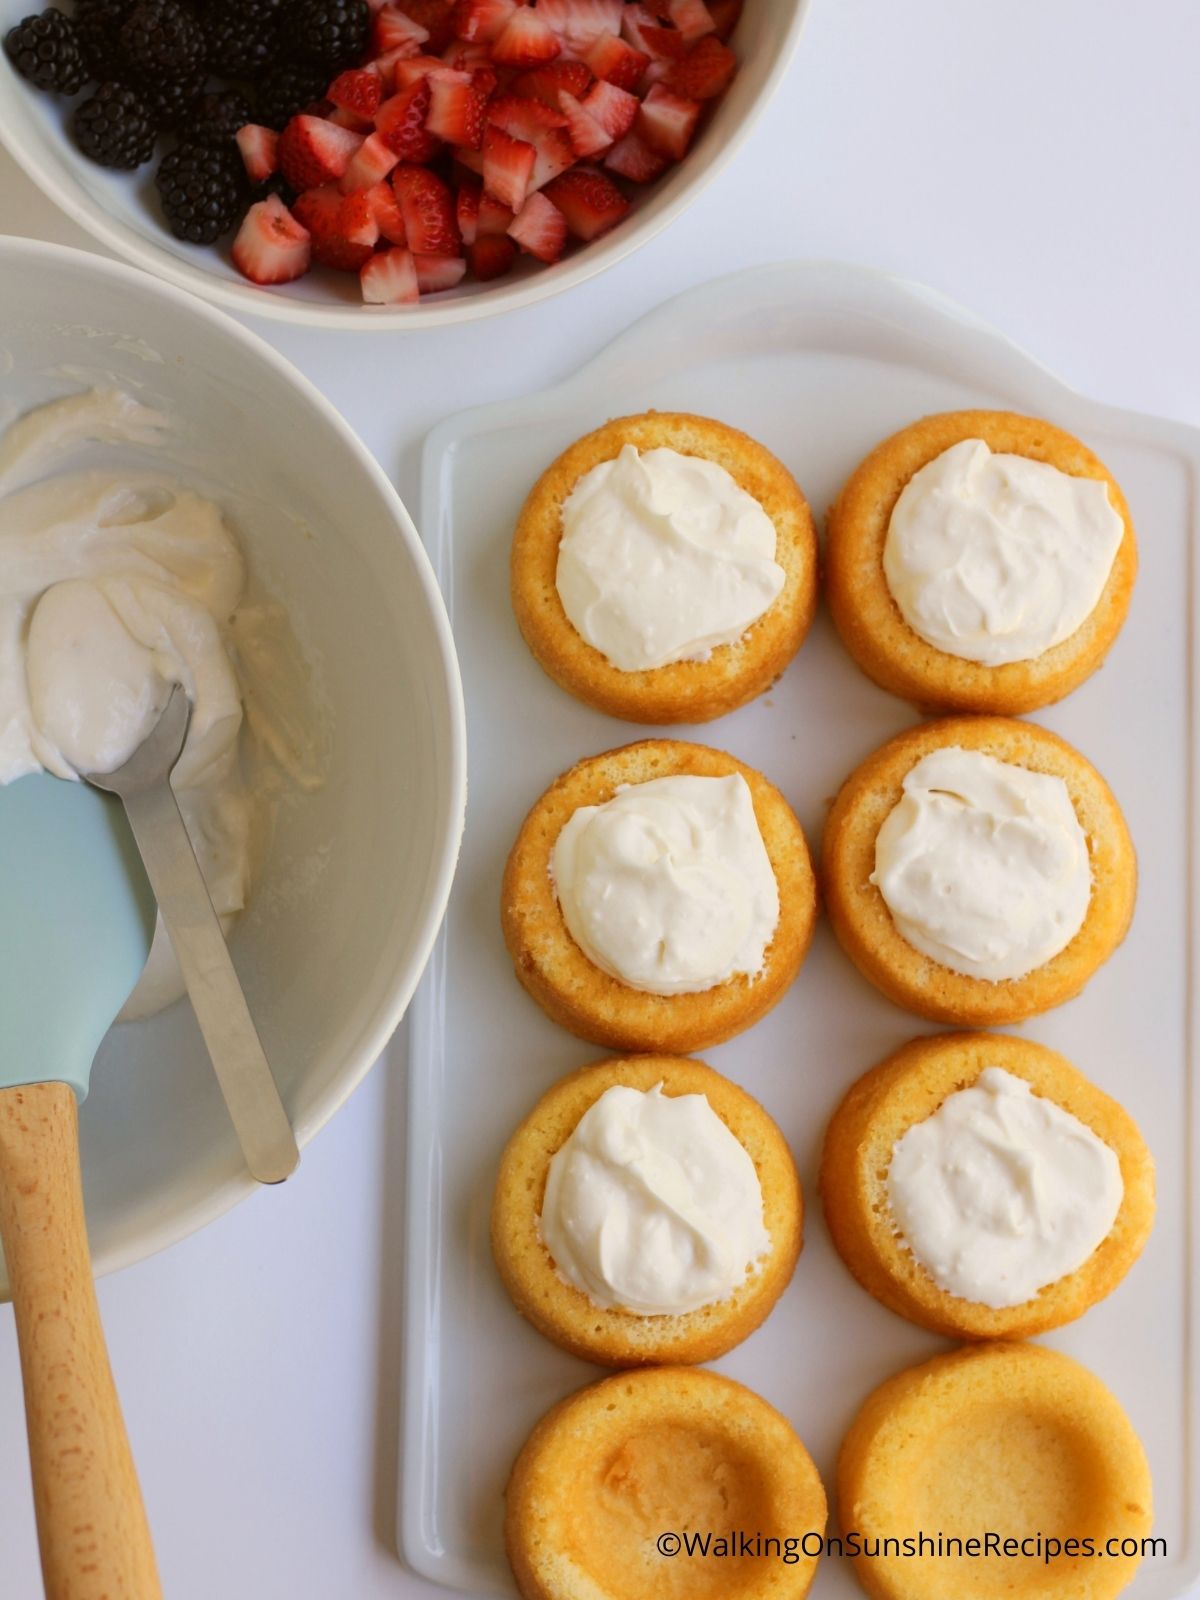 Fill dessert shells with cream cheese frostsing. 